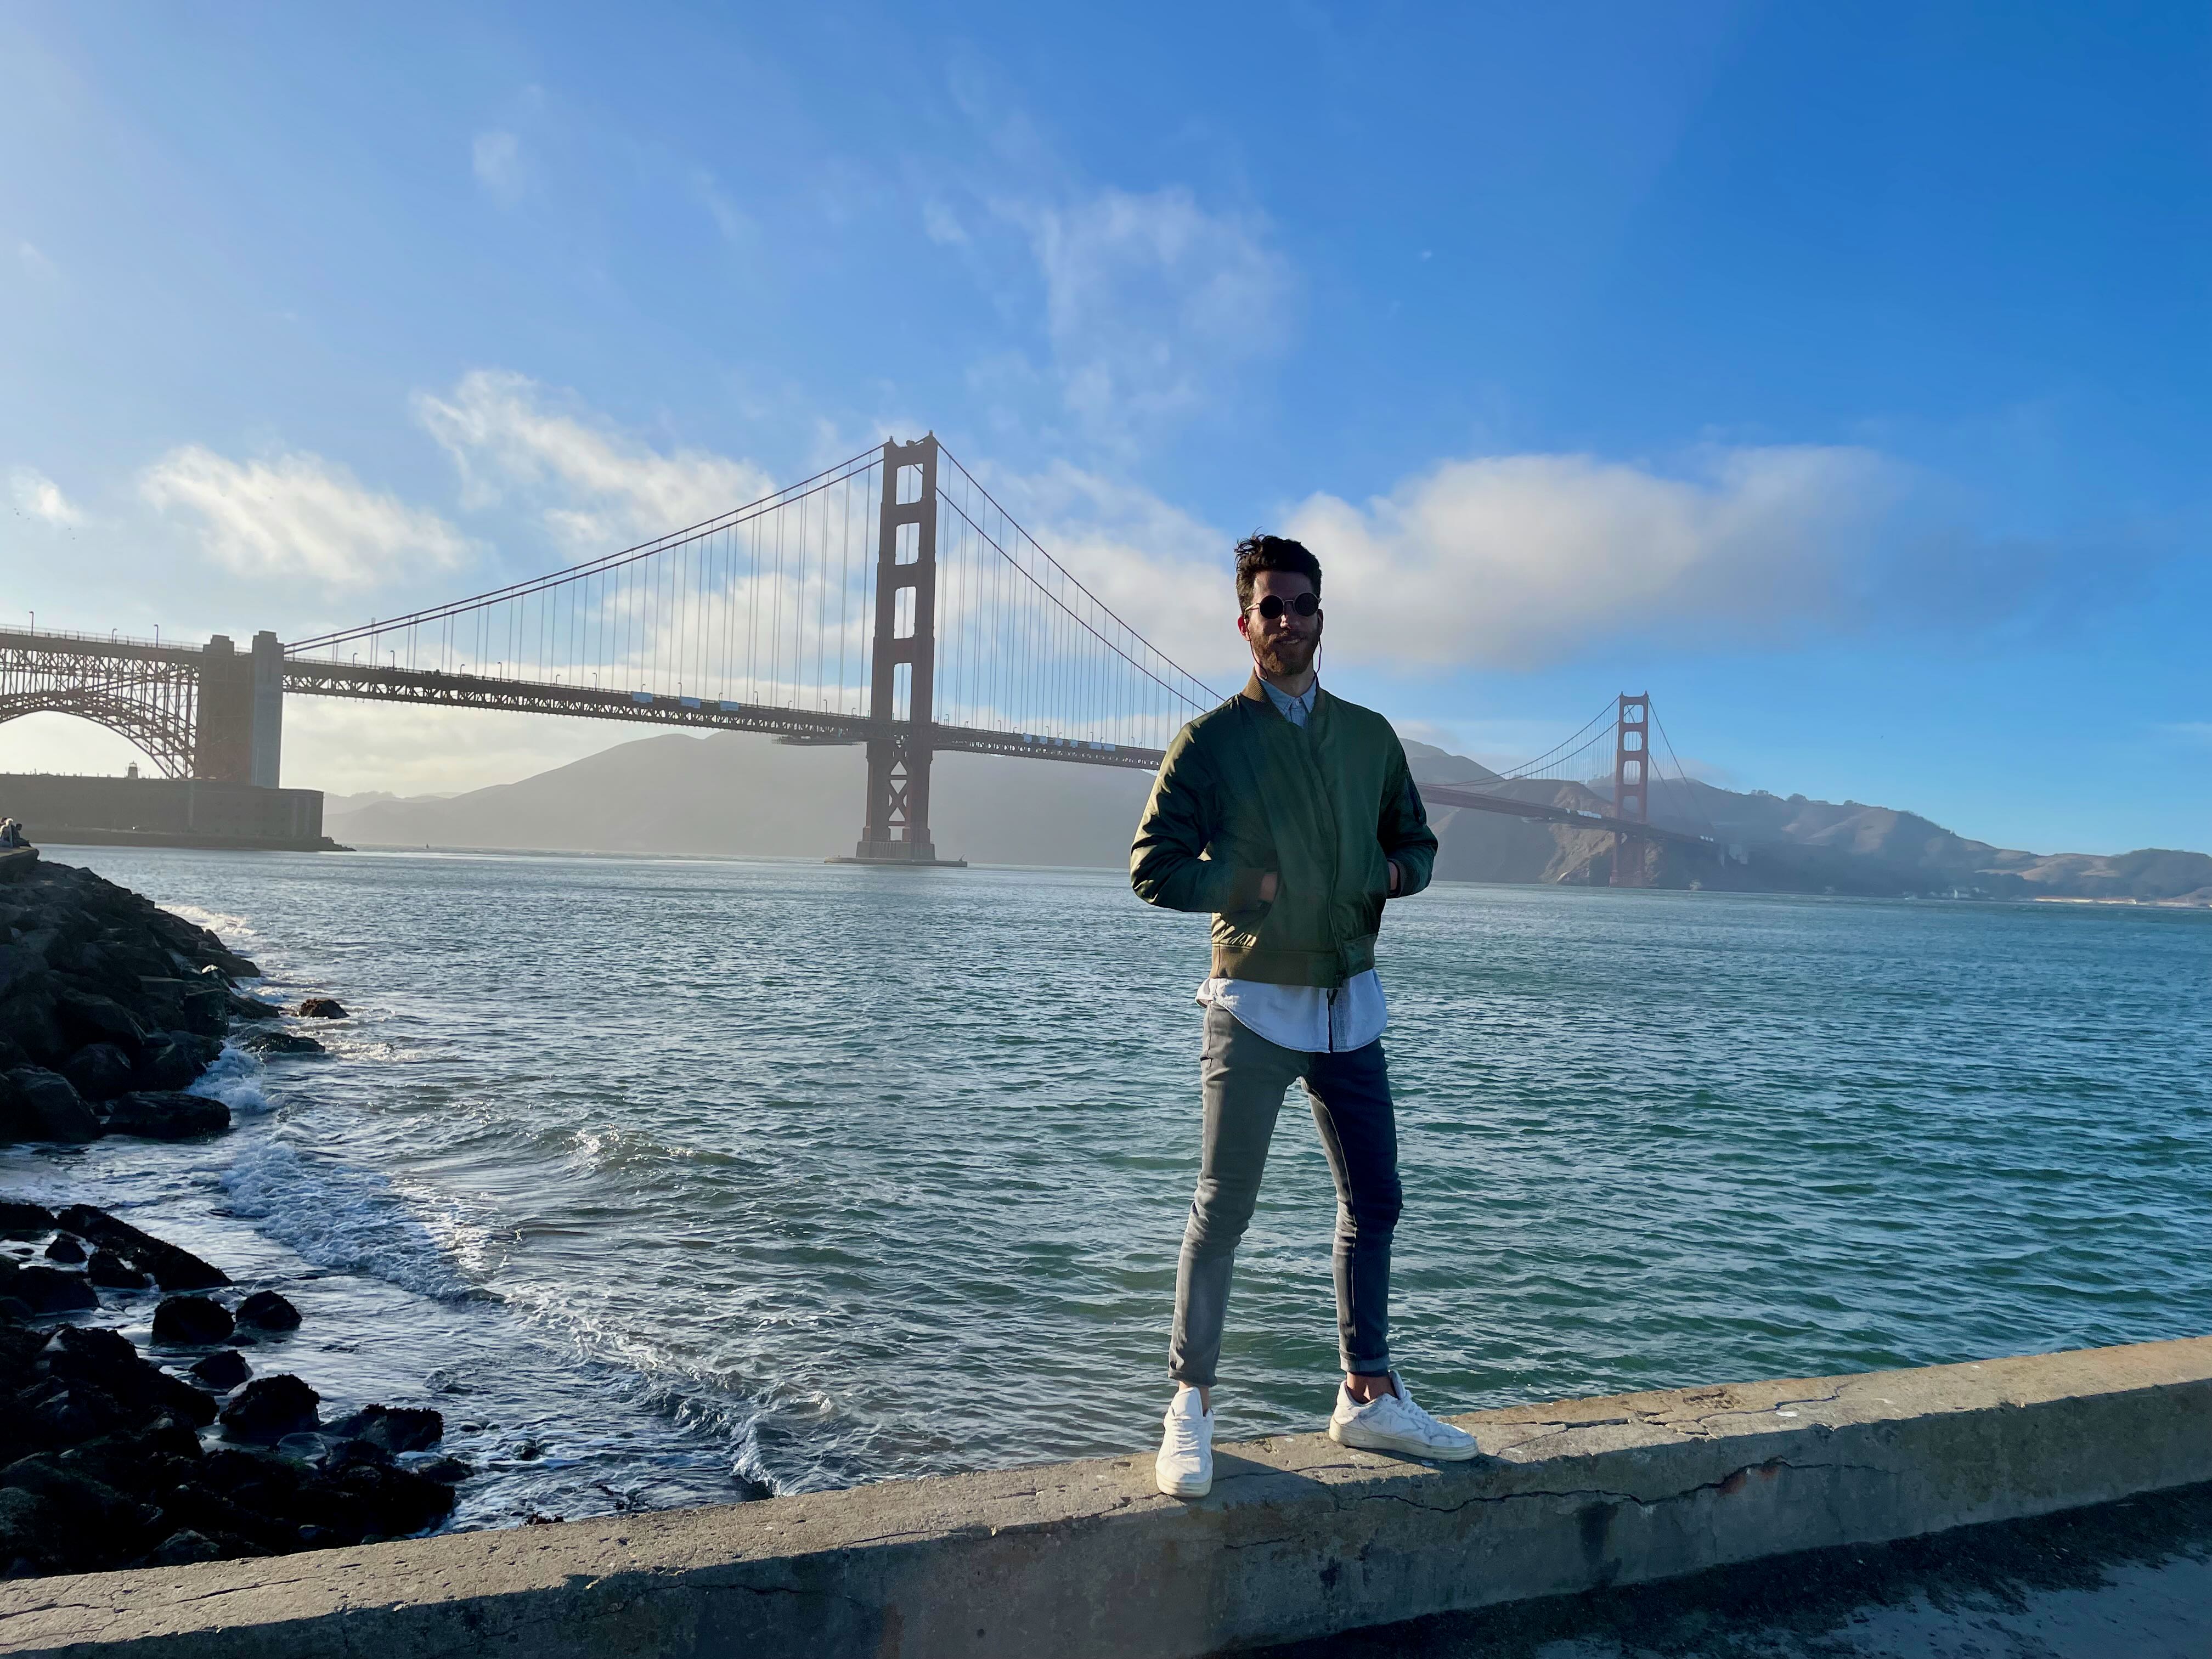 In front of the Golden Gate Bridge